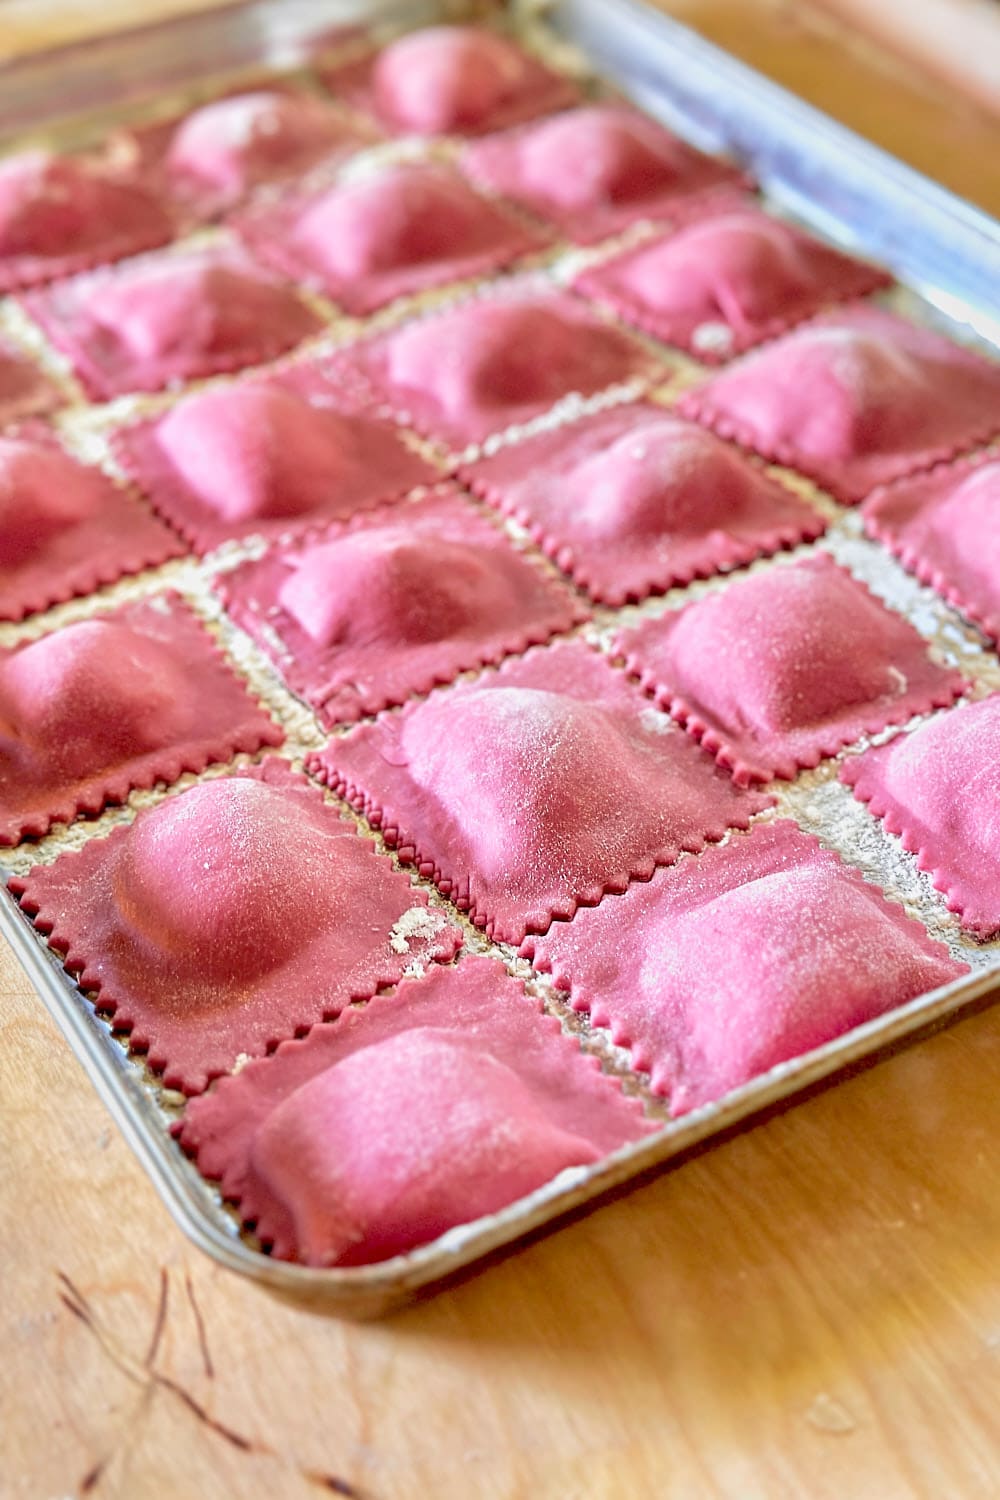 Homemade pink beet ravioli on a baking tray.